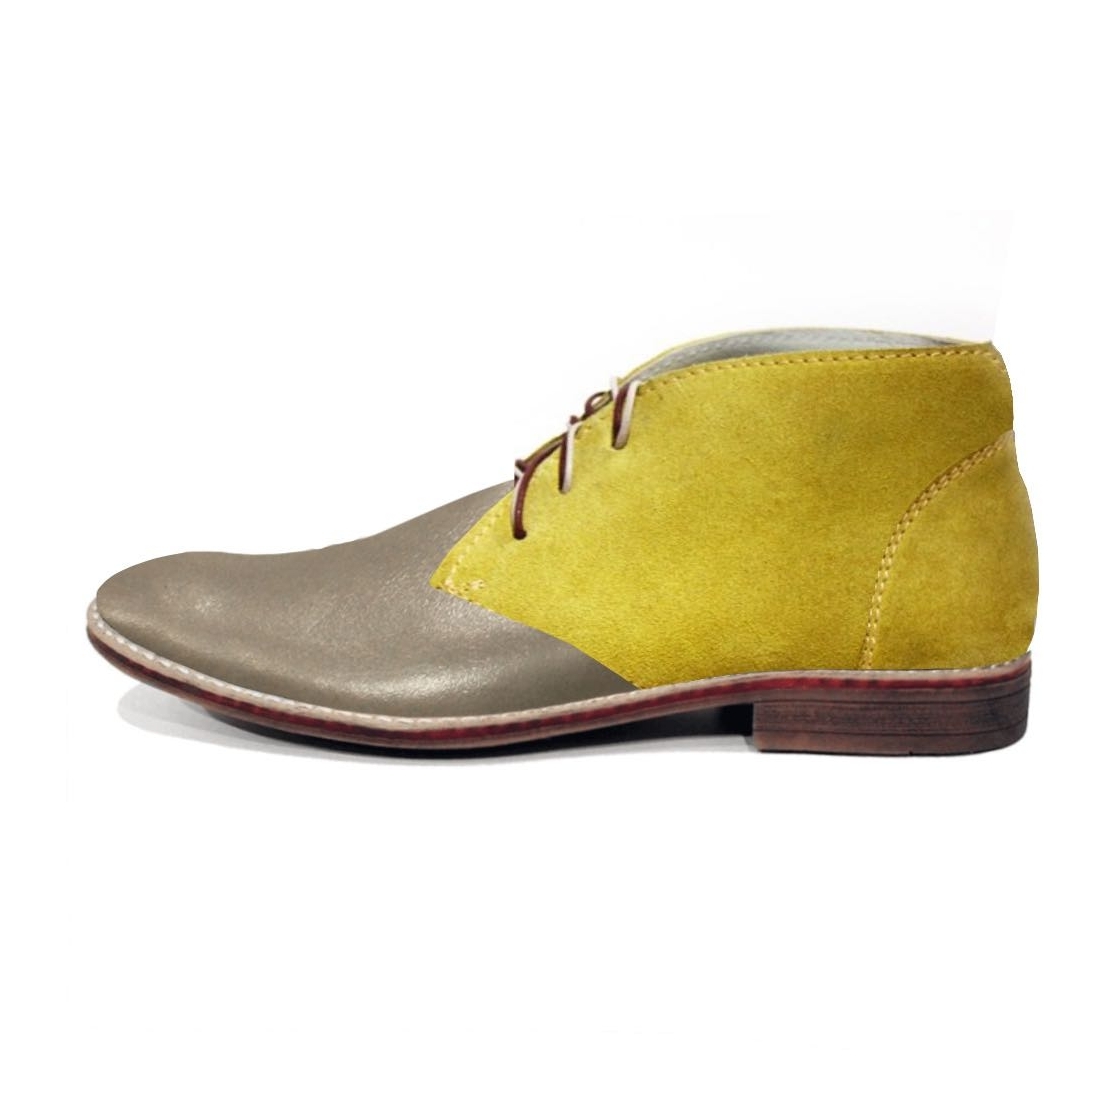 Modello Terrano - чукка мужские - Handmade Colorful Italian Leather Shoes